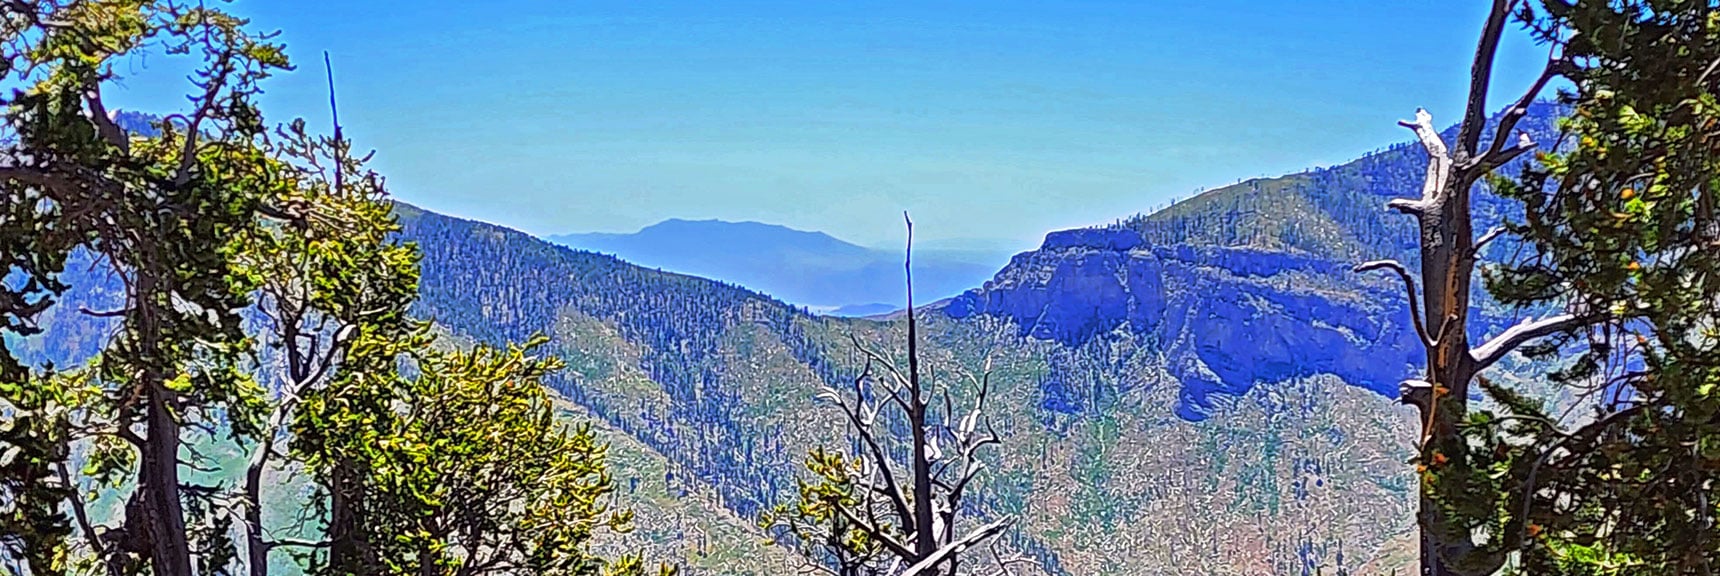 Harris/Griffith Saddle from Near Fletcher Peak Summit | Fletcher Canyon / Fletcher Peak / Cockscomb Ridge Circuit | Mt. Charleston Wilderness | Spring Mountains, Nevada